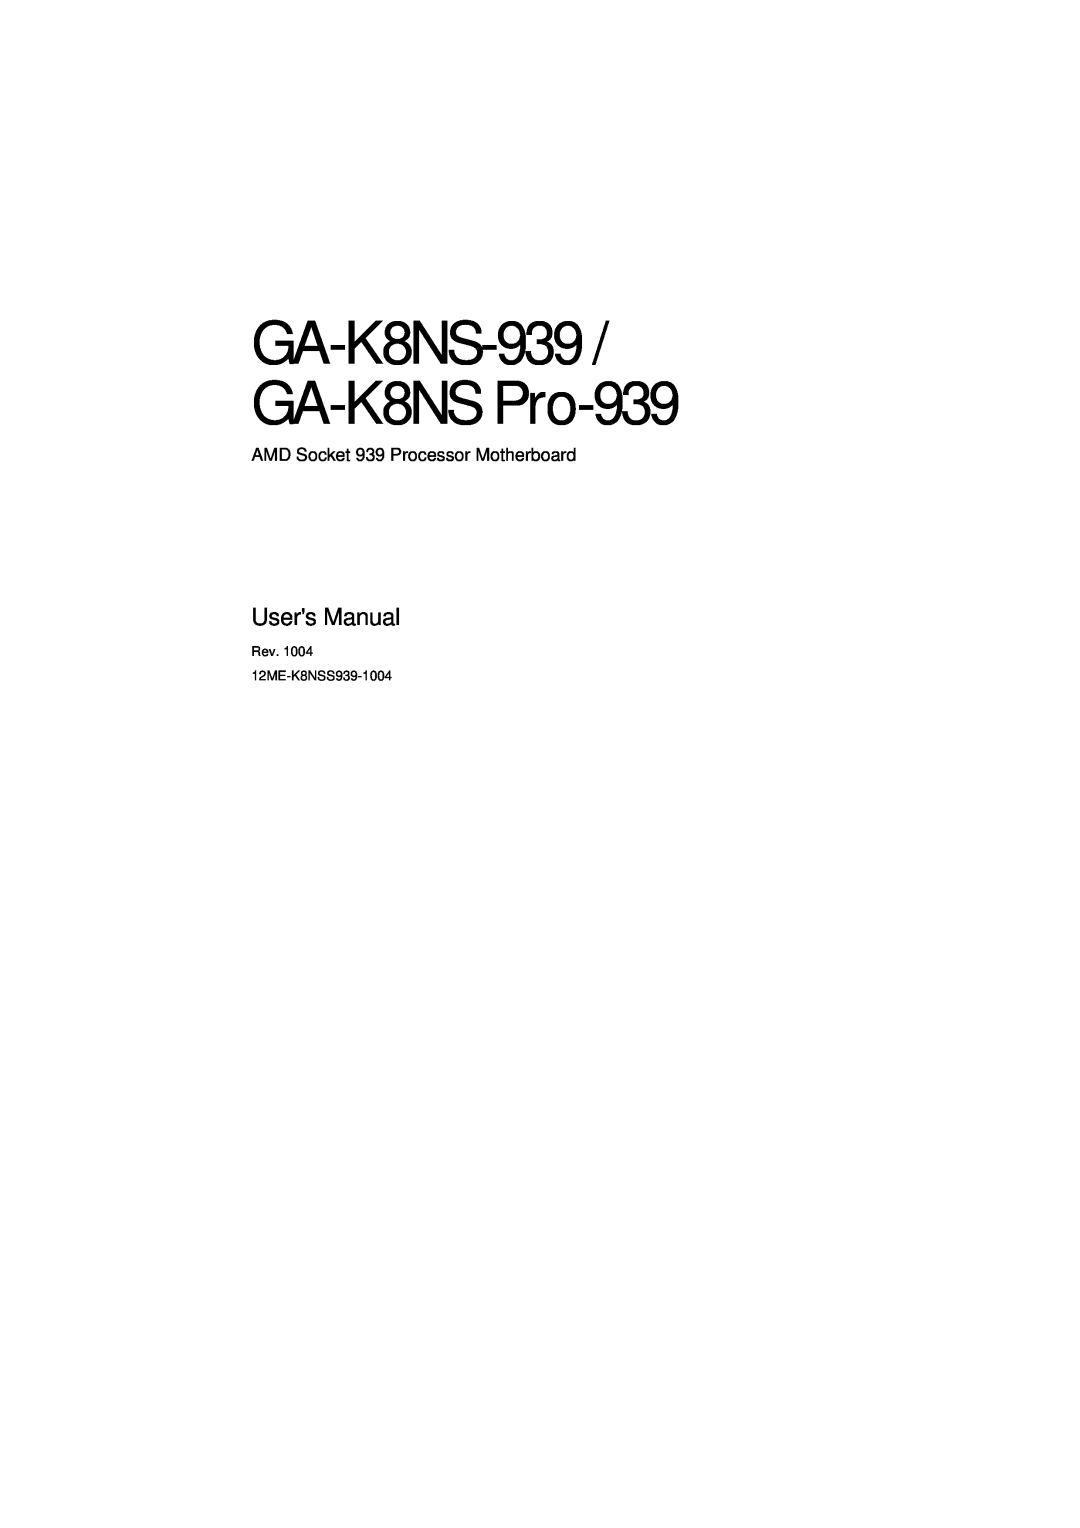 AMD GA-K8NS PRO-939 user manual GA-K8NS-939 / GA-K8NS Pro-939, Users Manual, AMD Socket 939 Processor Motherboard 